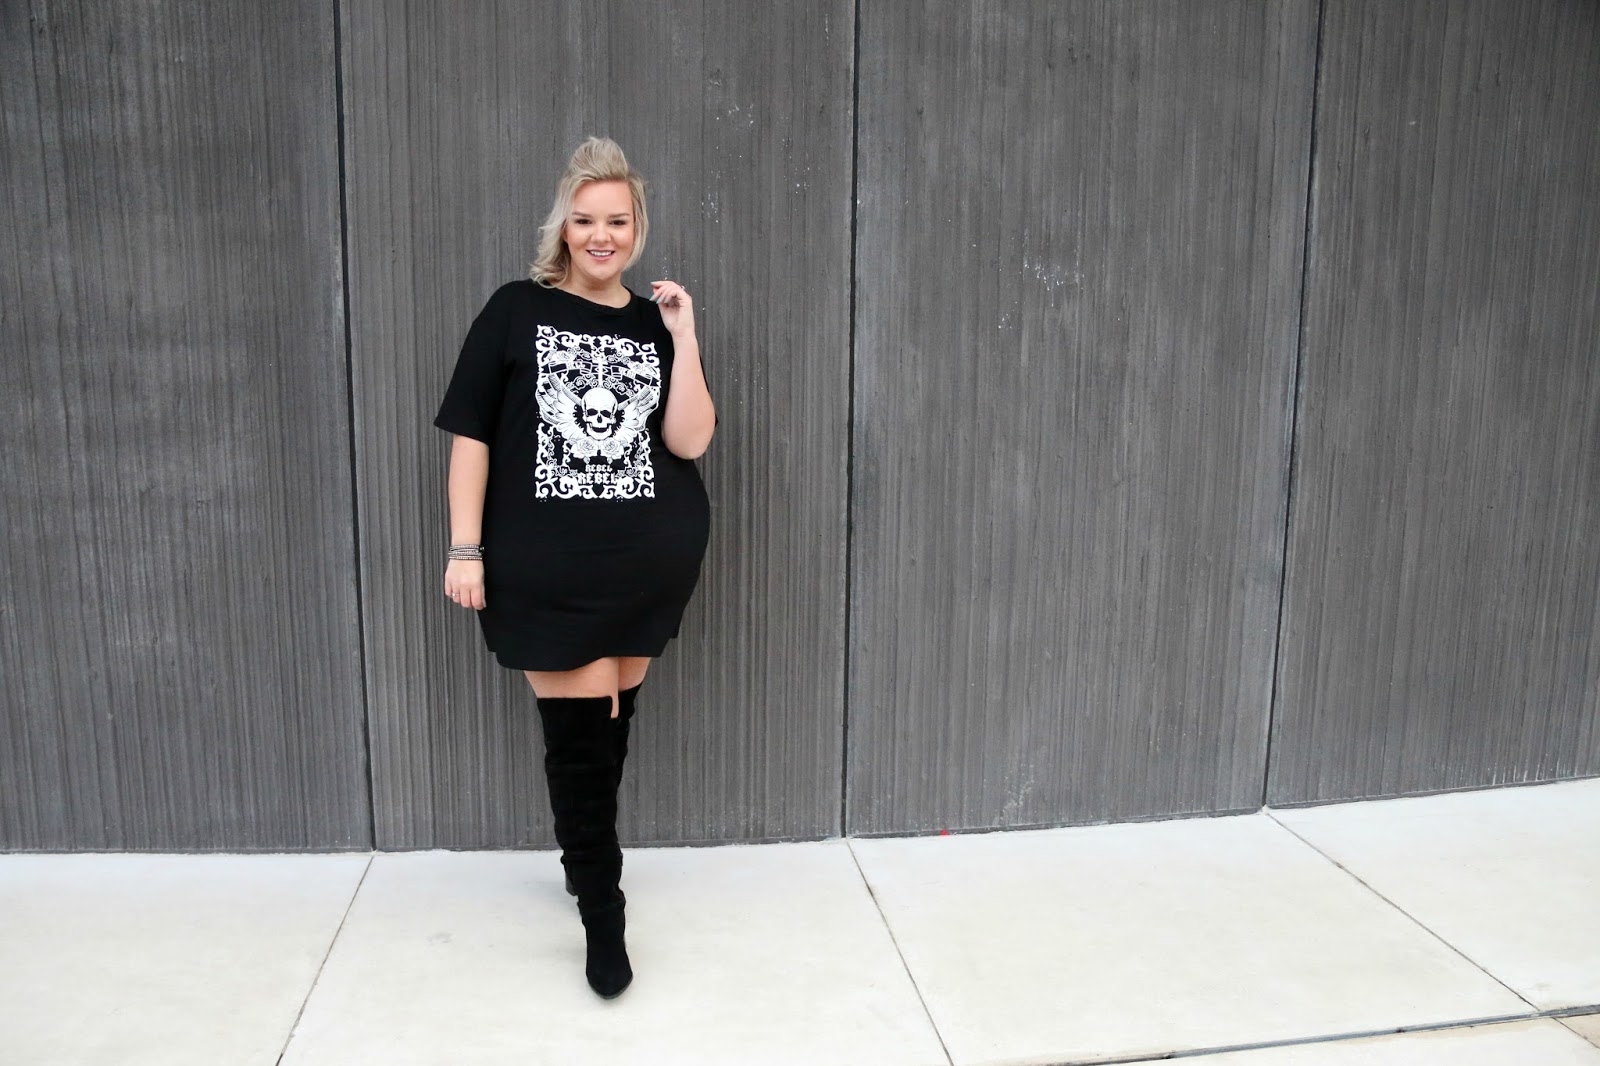 In The Style Curve Charlotte Crosby Black Rebel Rebel Skull Oversized T Shirt Dress on plus size blogger whatlauraloves